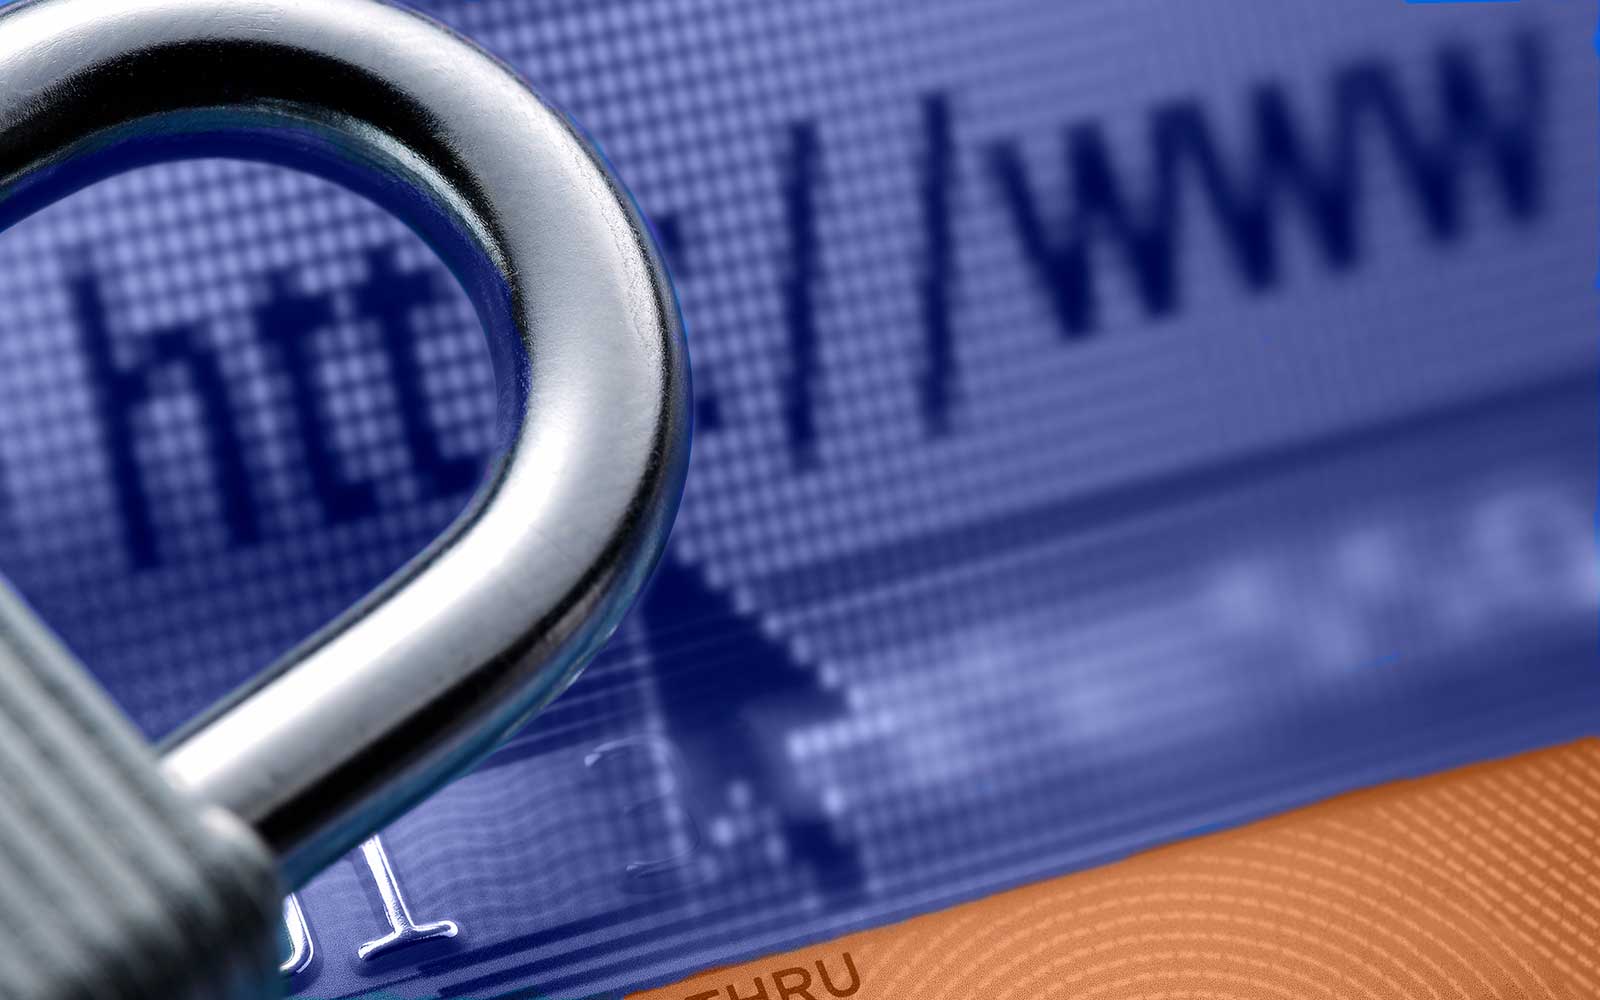 How Do I Make My Website Secure? The Essential Guide